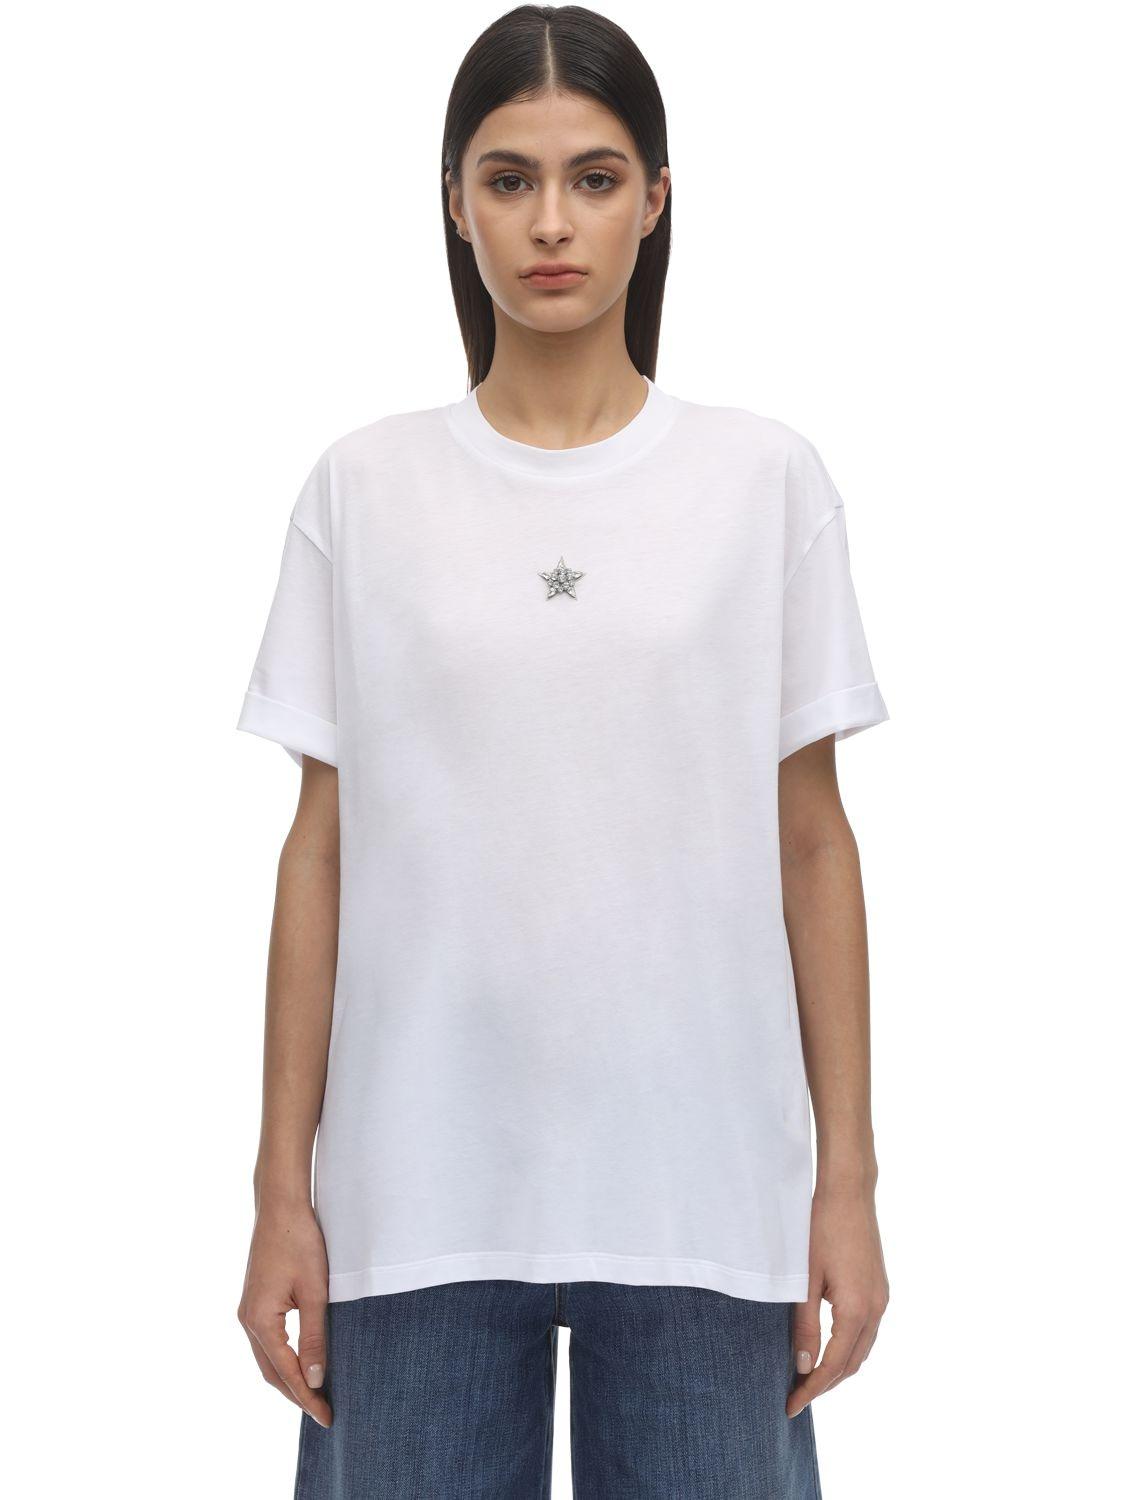 Stella McCartney Star Detail Cotton Jersey T-shirt in White - Lyst